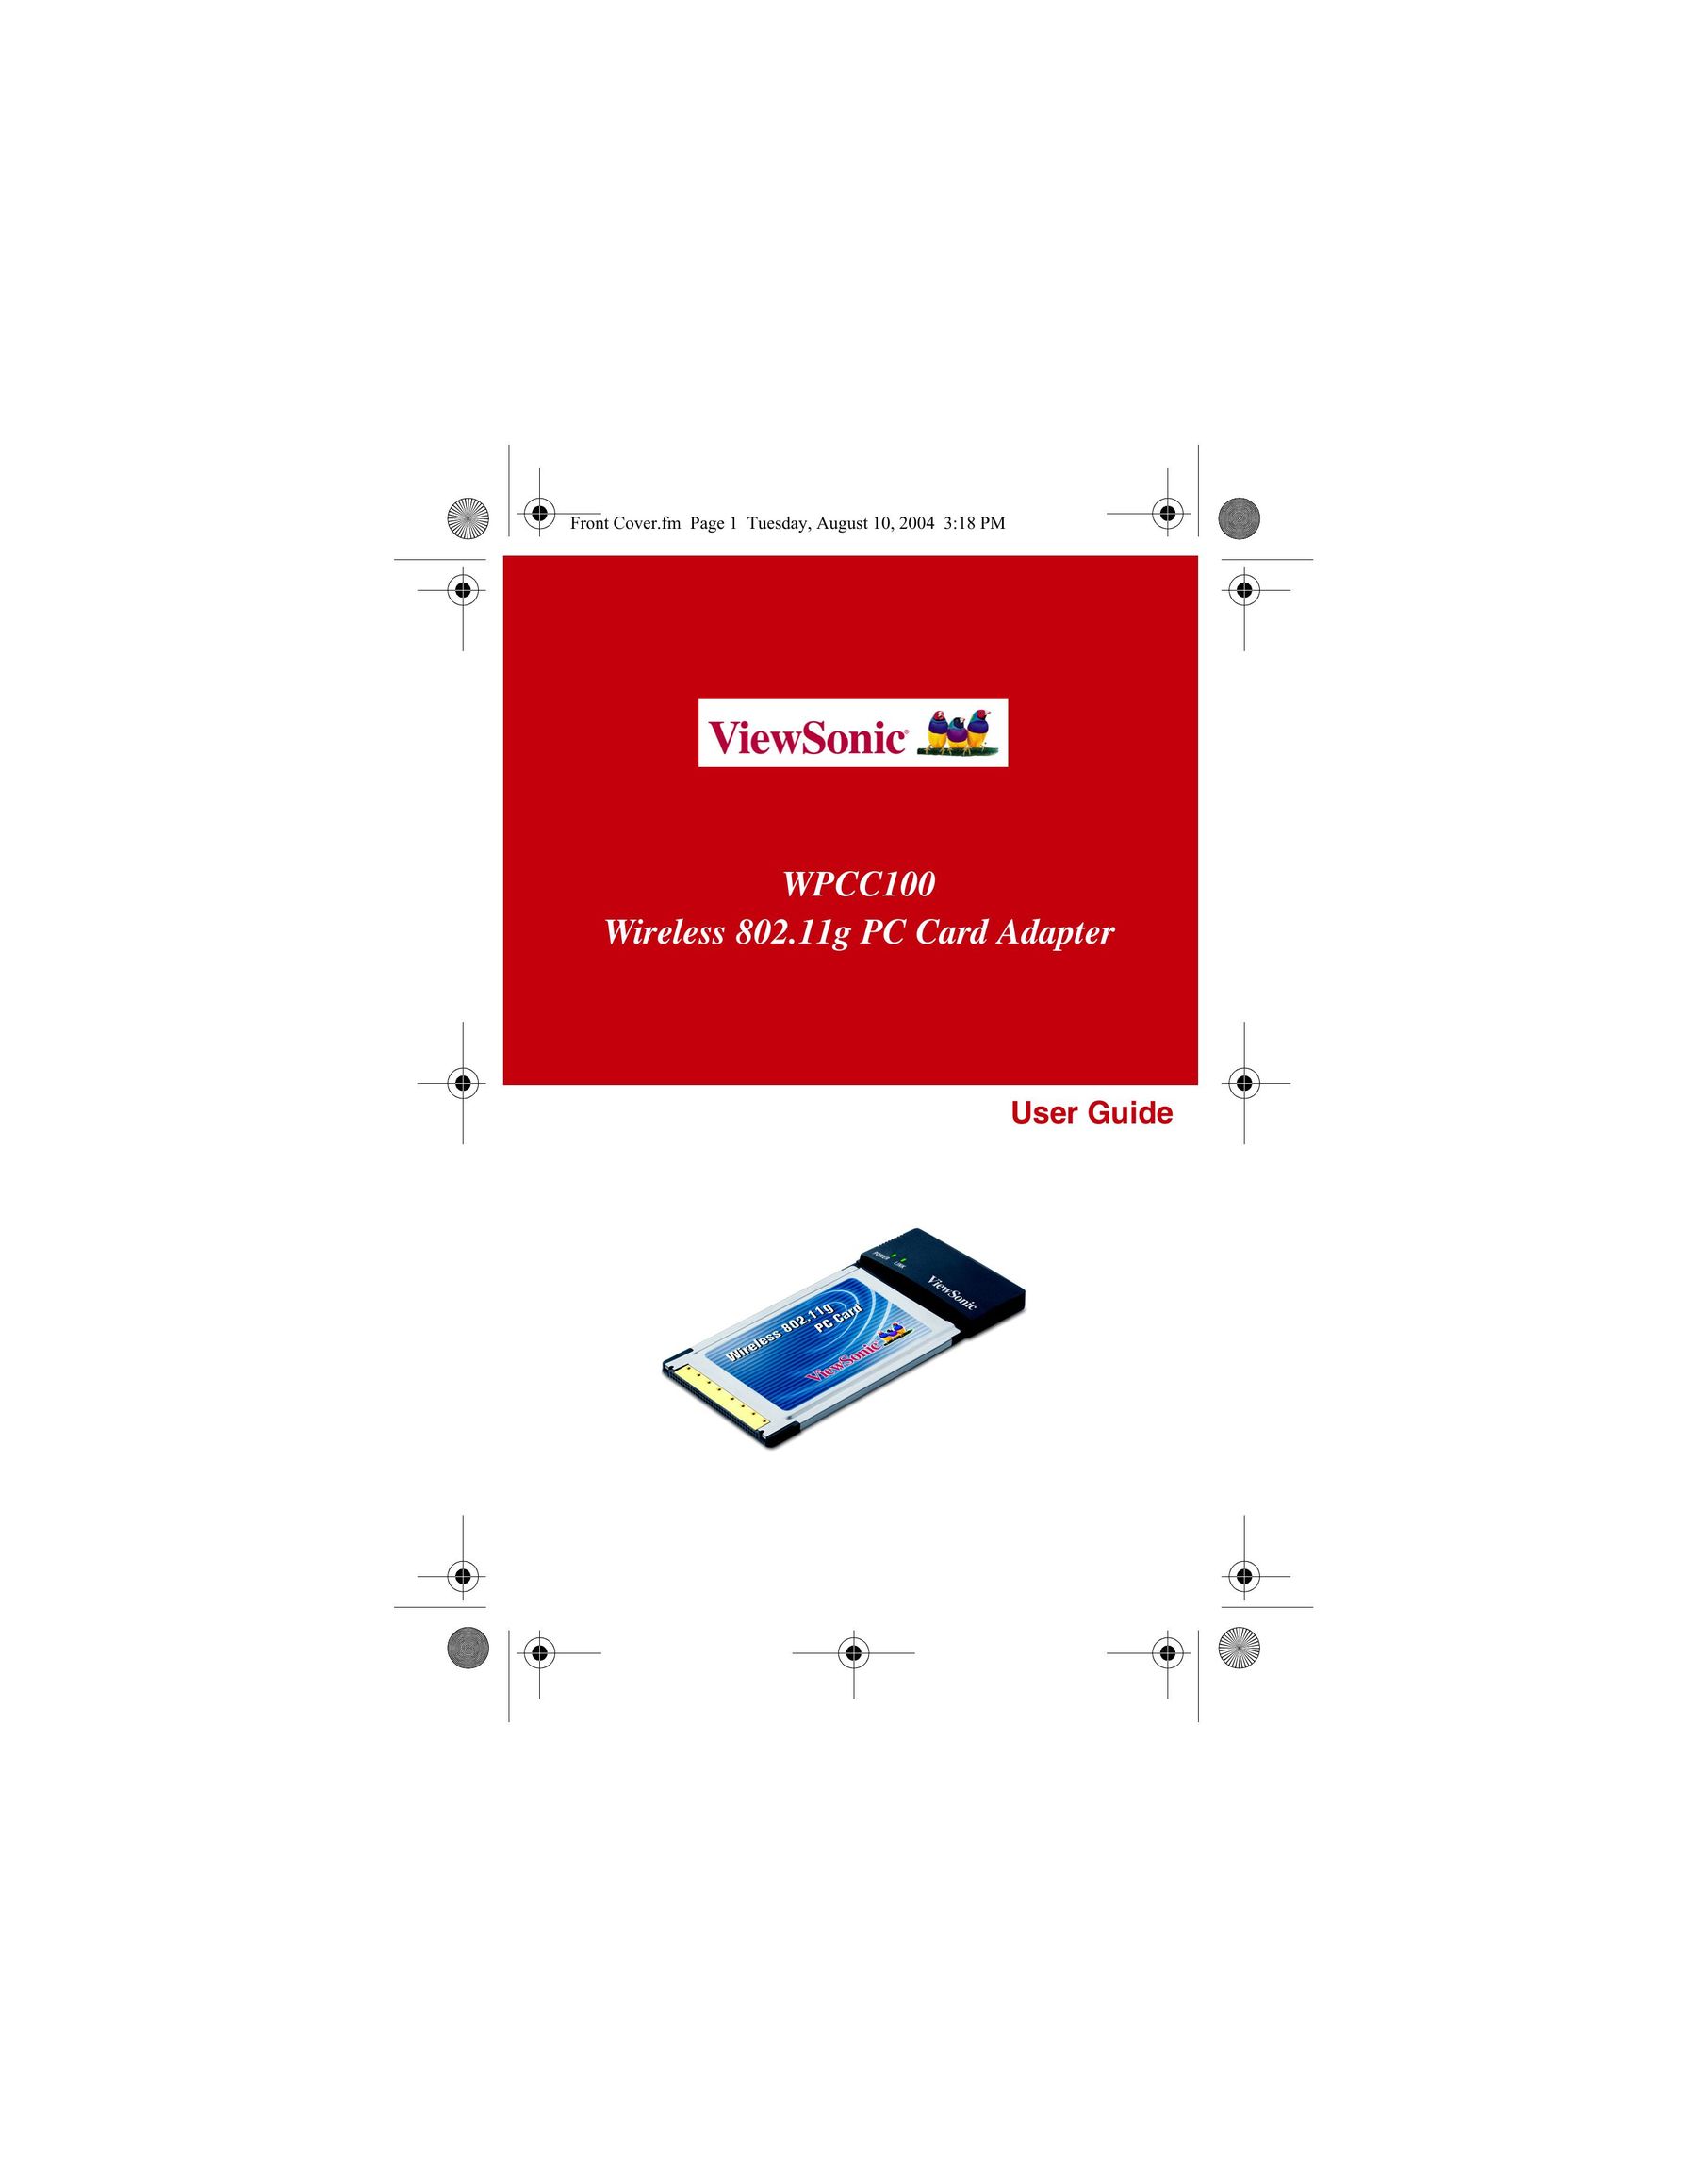 ViewSonic WPCC100 Network Card User Manual